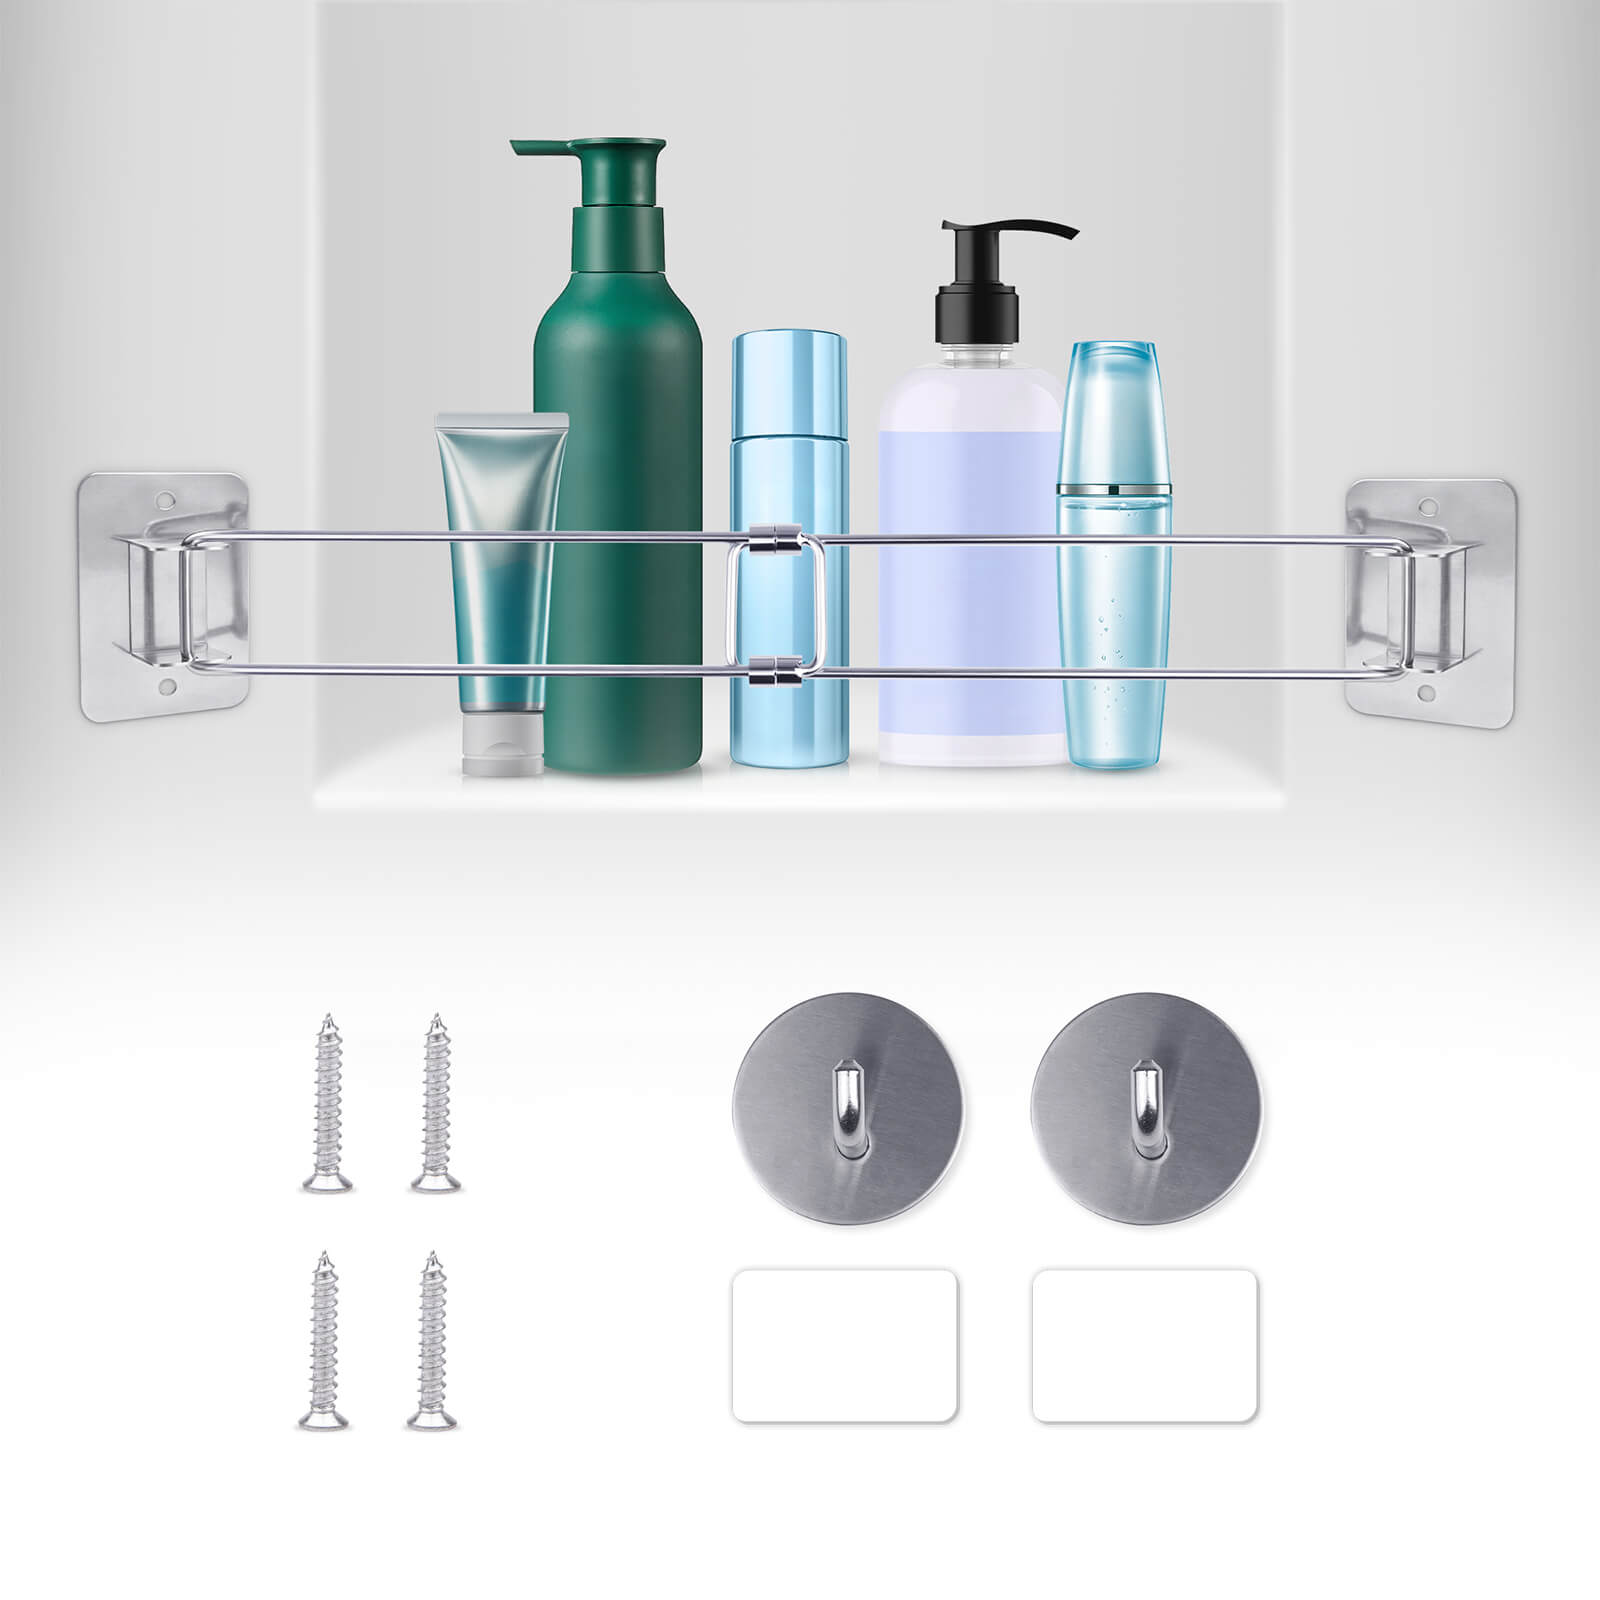 RV Shampoo Bottle Holder Fence Trailer Bathroom Corner Storage Bar, No Drilling or Screw Mount